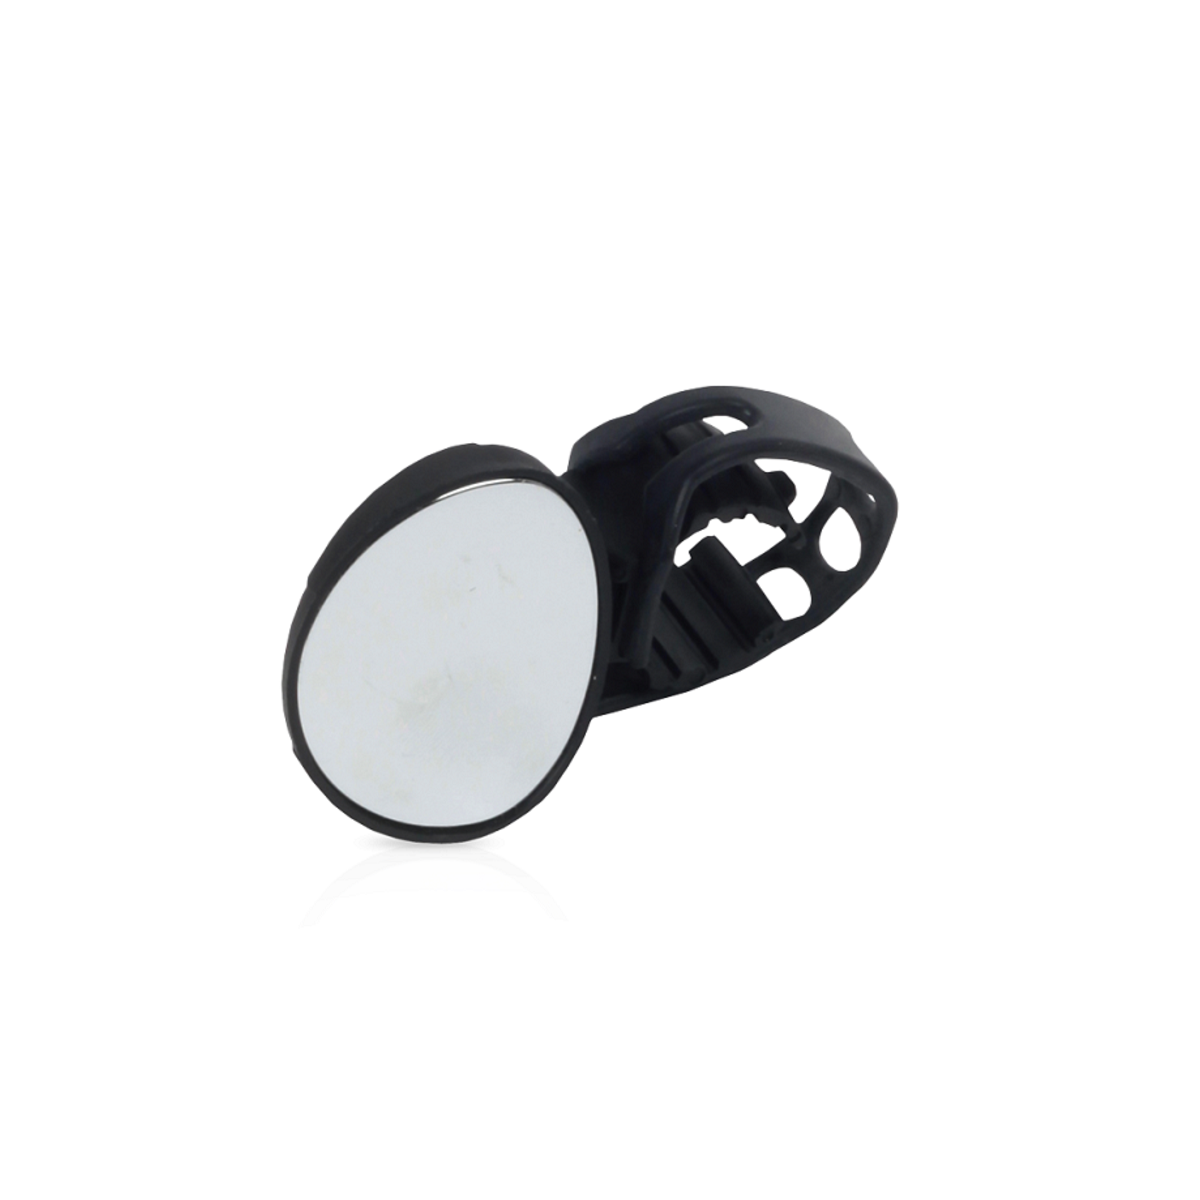 ZEFAL SPY mirror -black